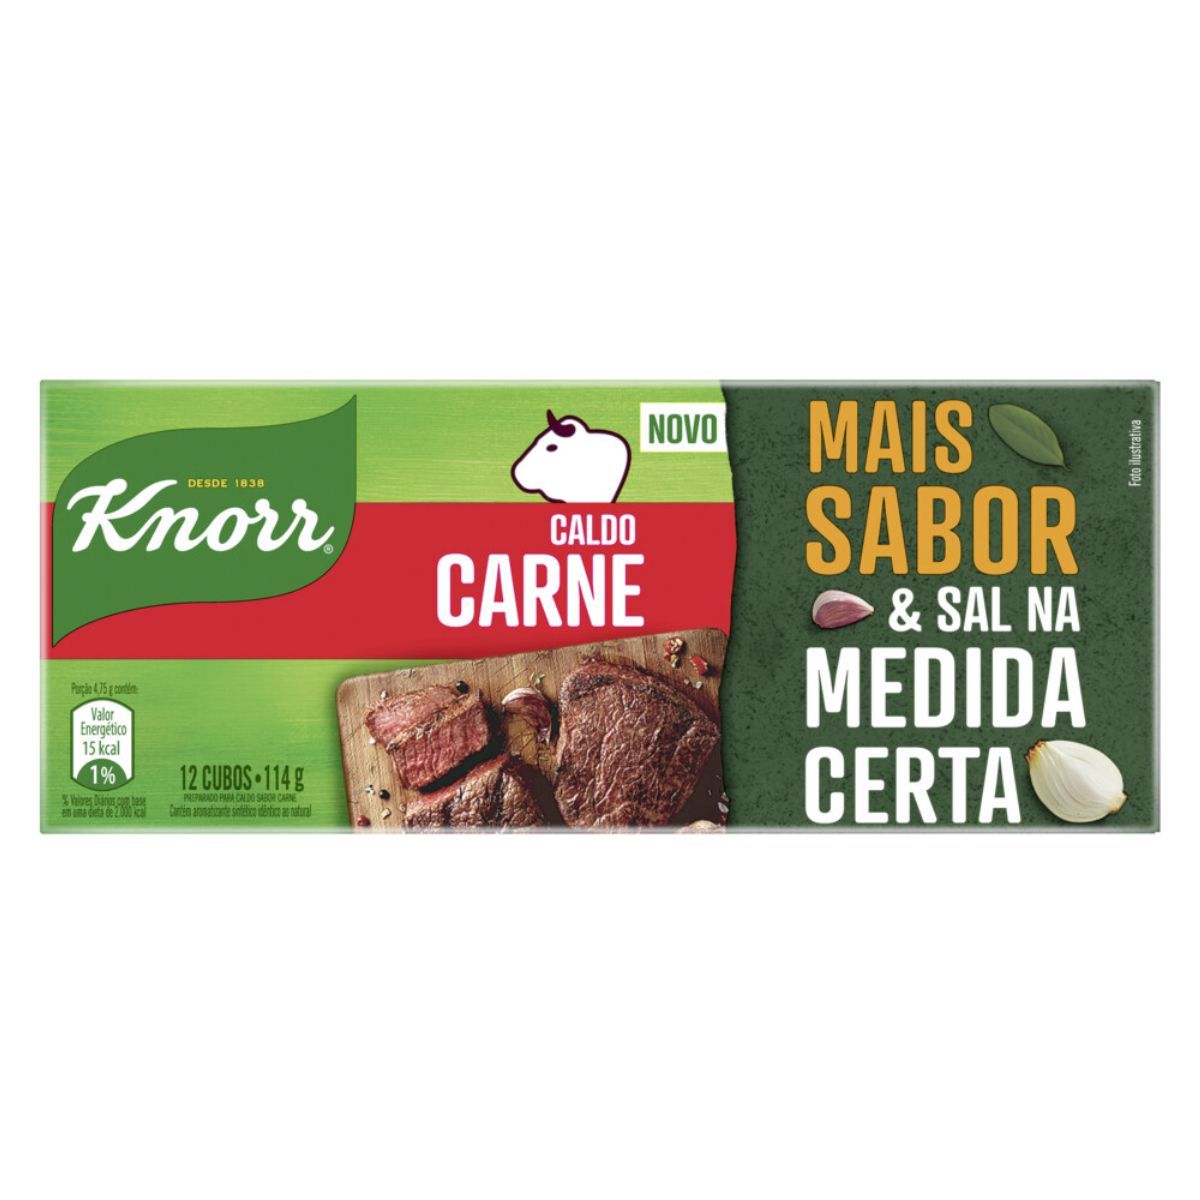 Caldo Knorr Carne 12 cubos